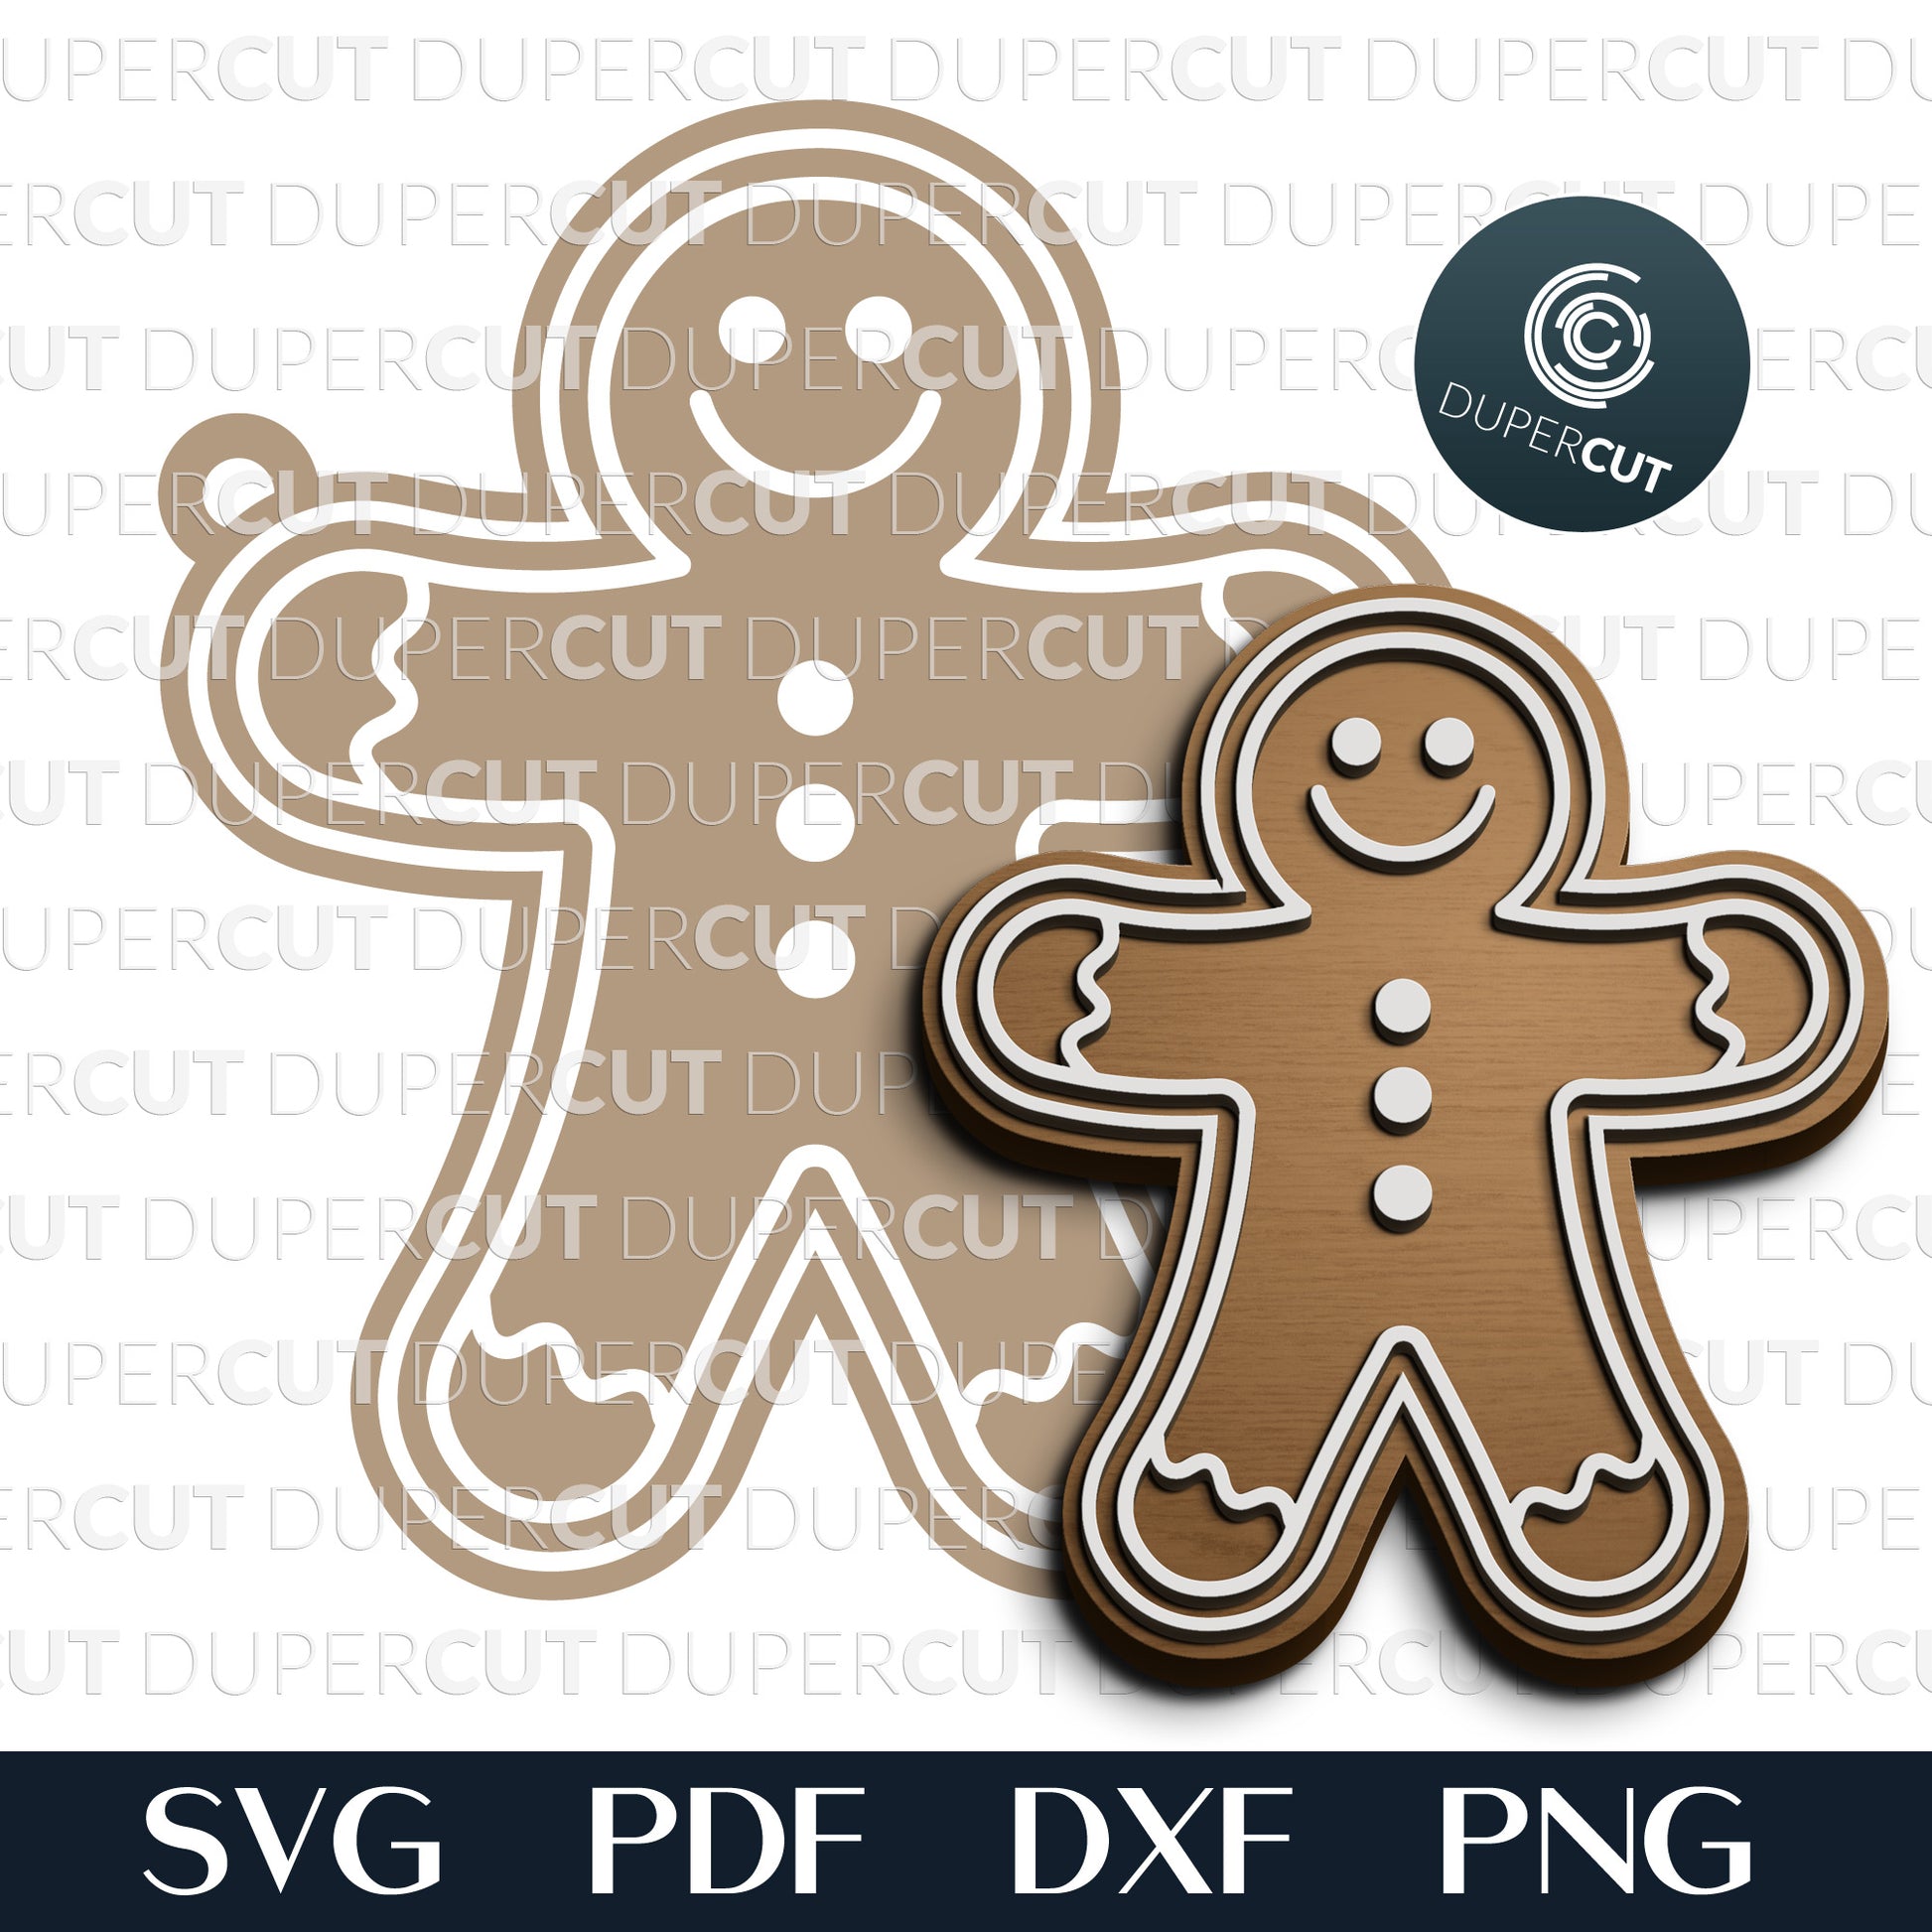 Gingerbread Man - Christmas ornament decoration SVG PDF DXF layered cutting files for Glowforge, Cricut, Silhouette, CNC plasma machines by DuperCut